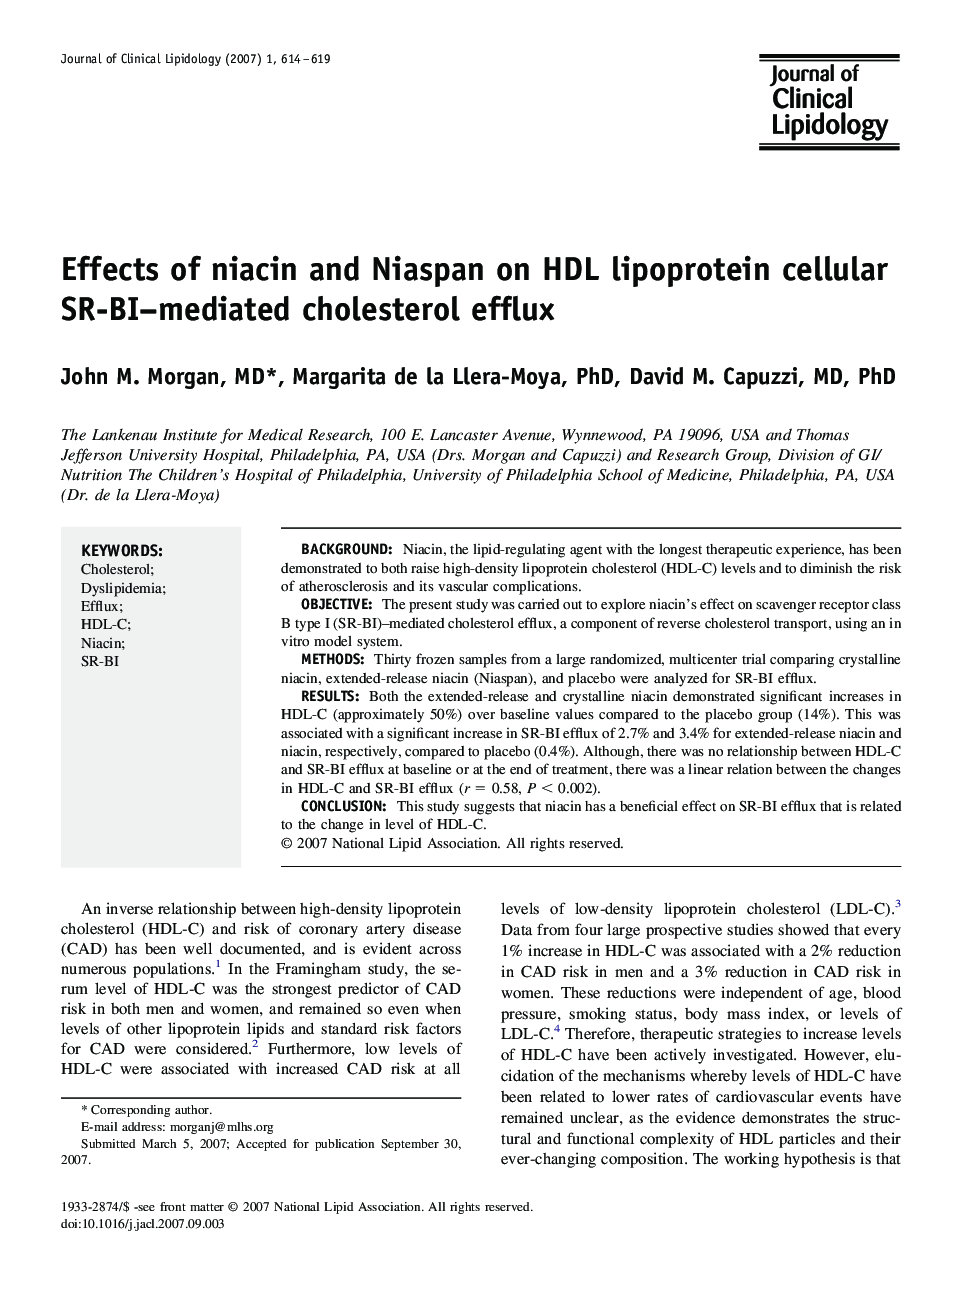 Effects of niacin and Niaspan on HDL lipoprotein cellular SR-BI–mediated cholesterol efflux